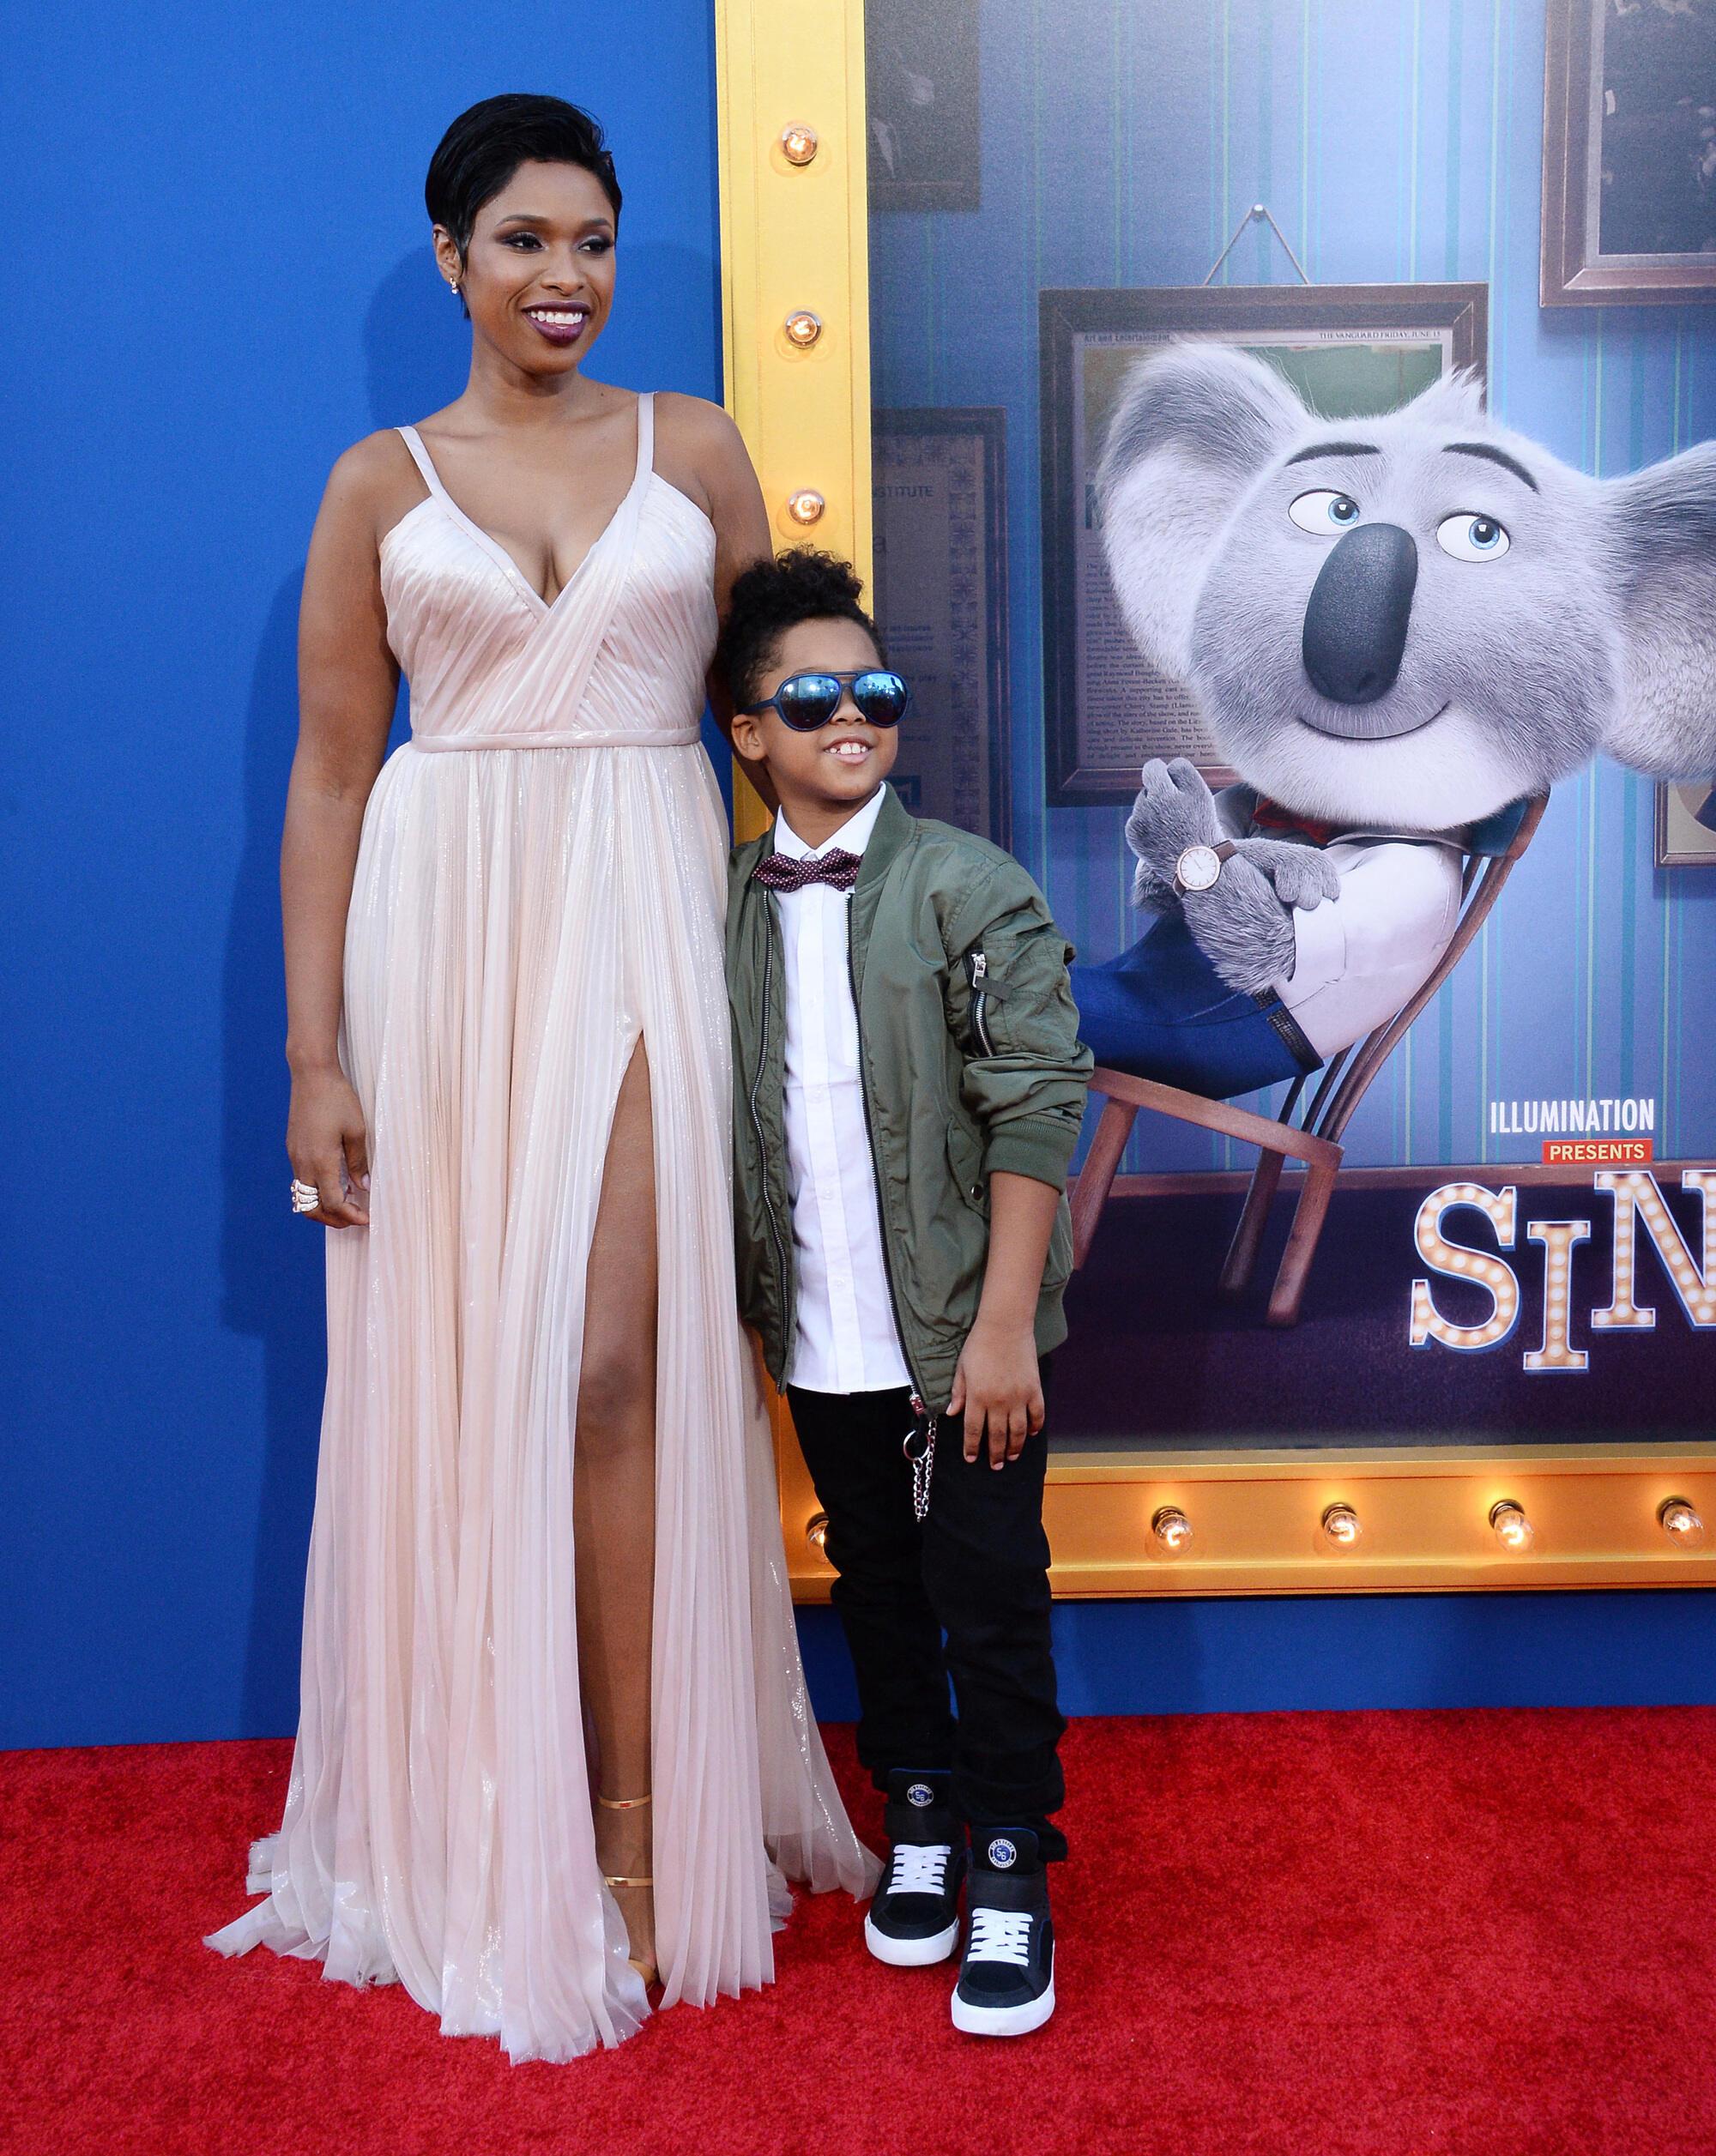 Jennifer Hudson and son David Daniel Otunga Jr. attend the "Sing" premiere in Los Angeles